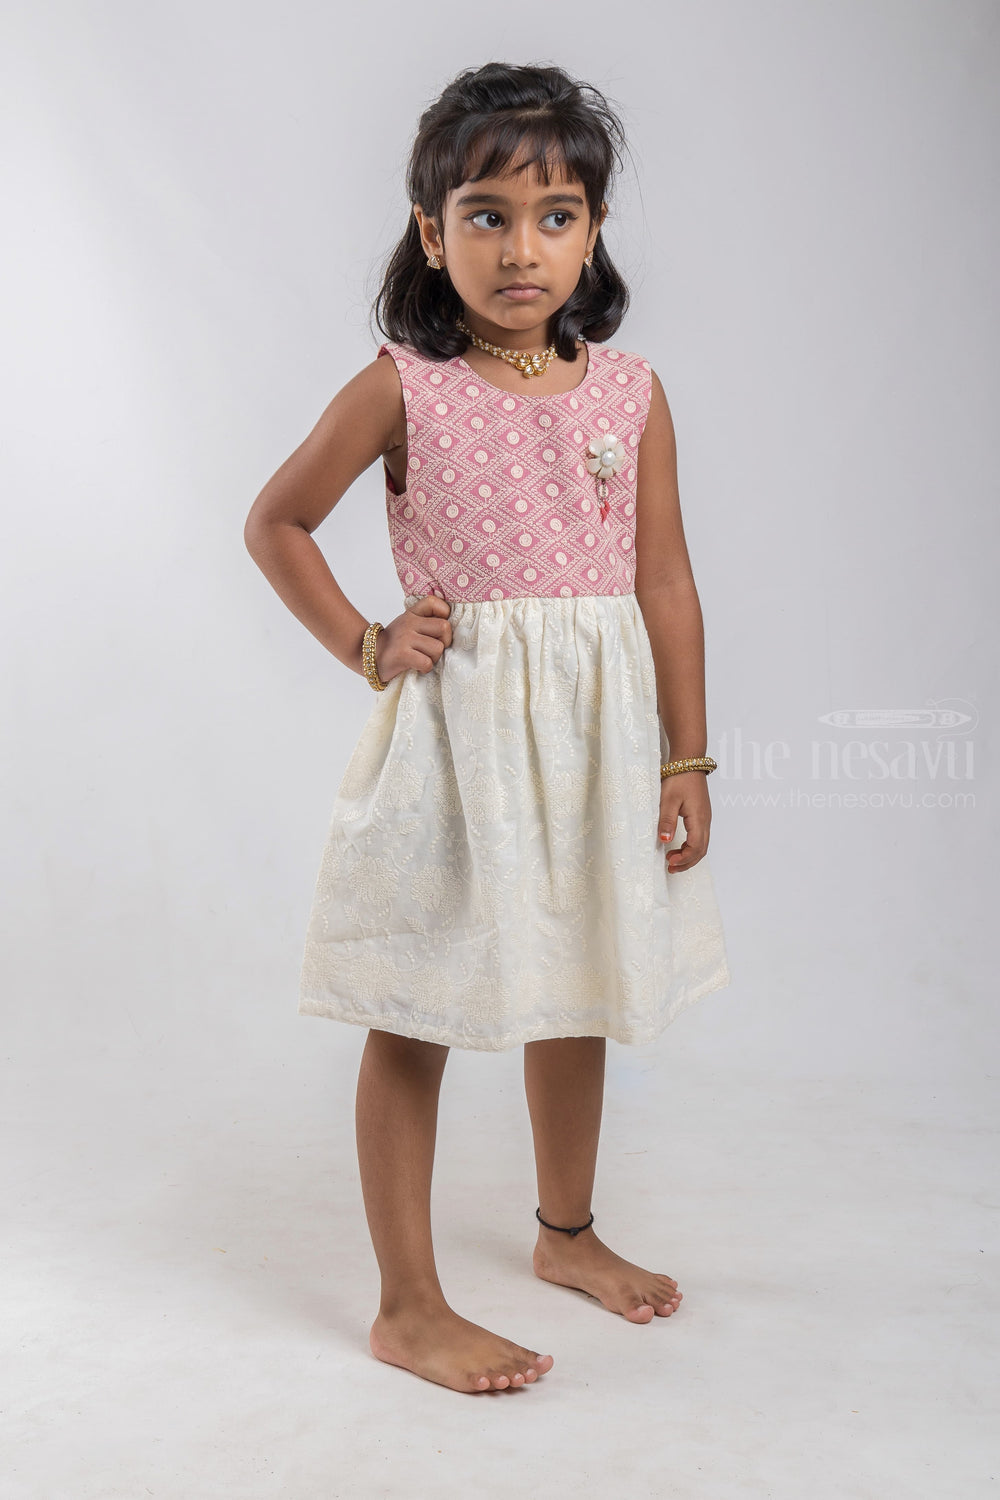 The Nesavu Baby Cotton Frocks Floral Designer White Cotton Frock with Geometrical Lucknow Chikan Maroon Yoke for Baby Girls psr silks Nesavu